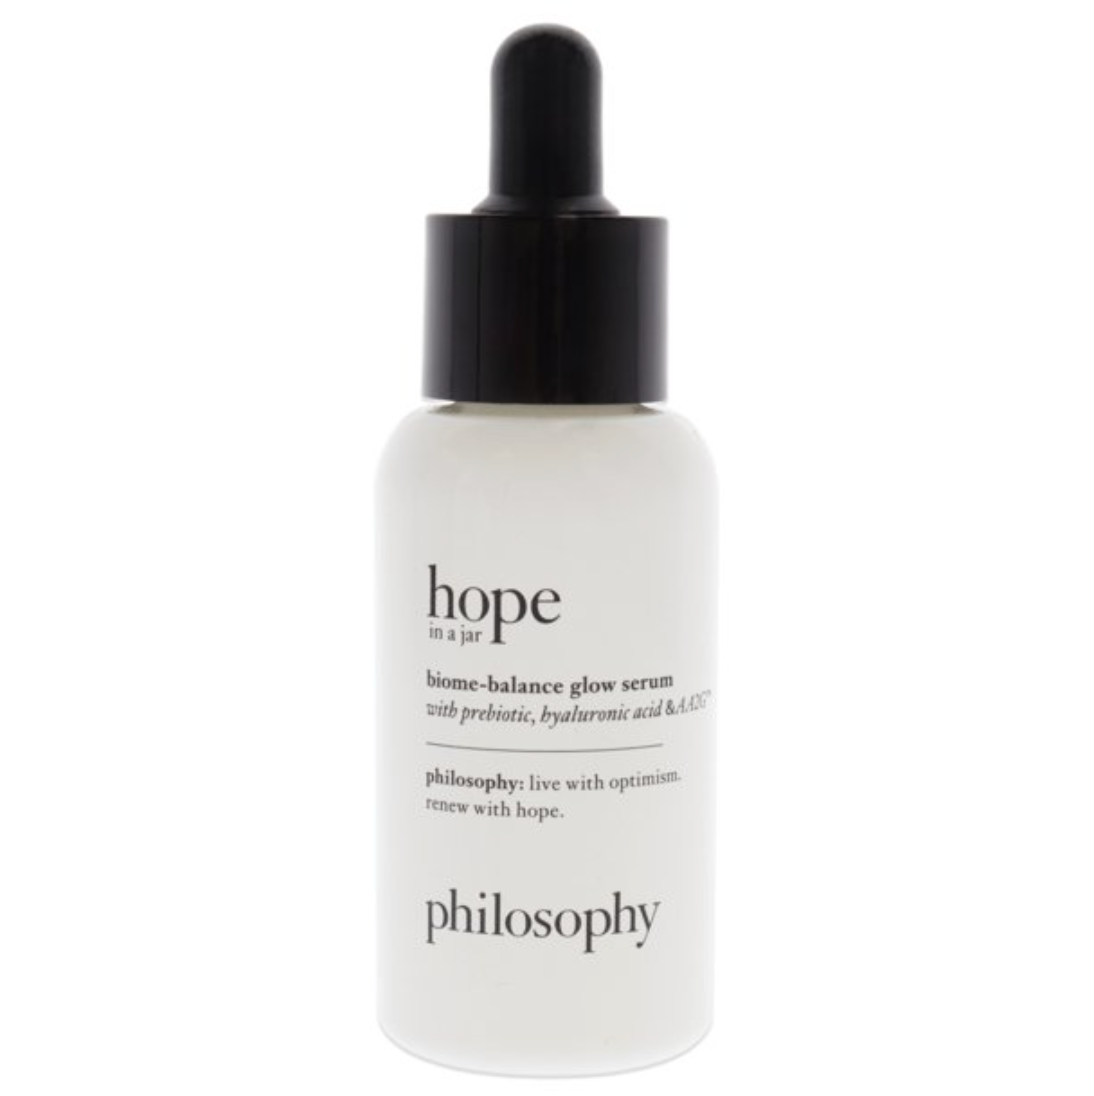 Philosophy Hope In A Jar Biome-Balance Glow Serum